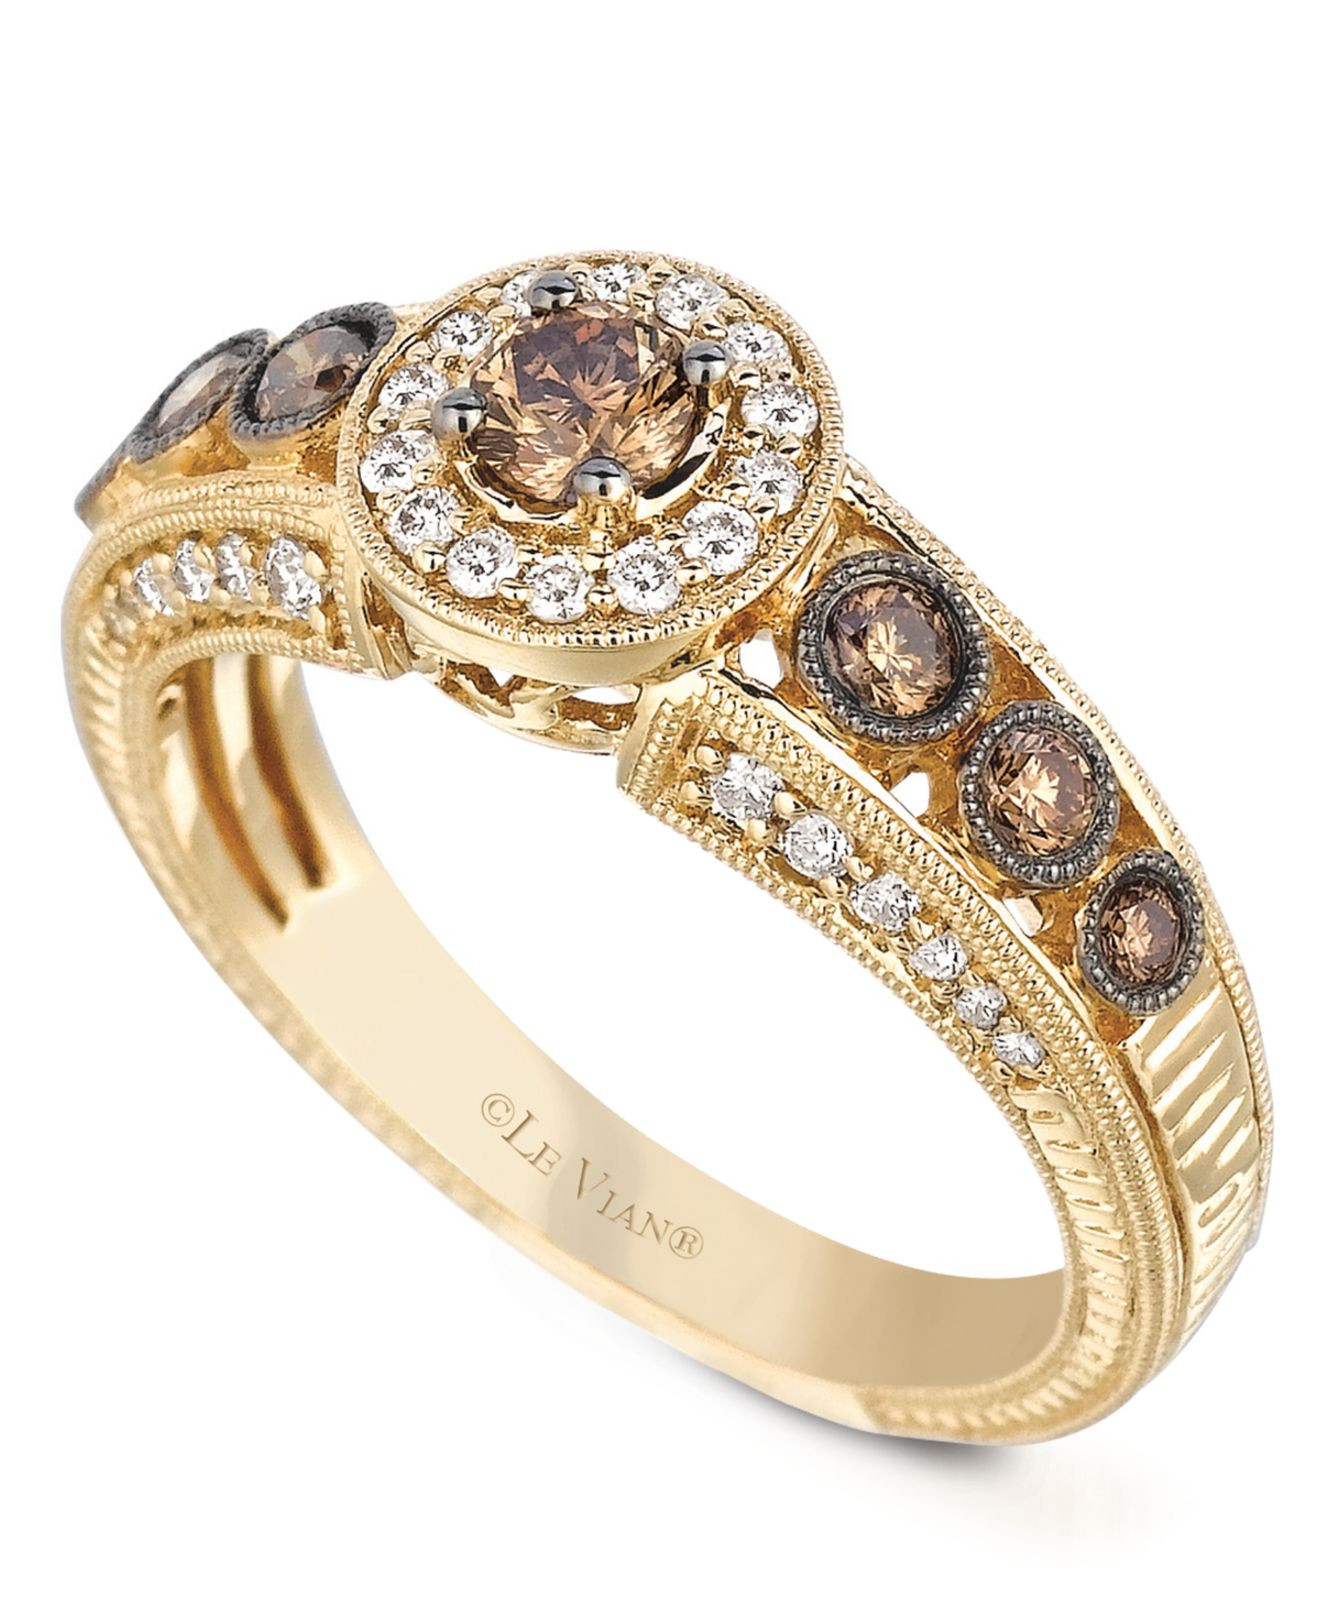 Chocolate Diamond Engagement Ring
 Le vian White And Chocolate Diamond Engagement Ring 7 8